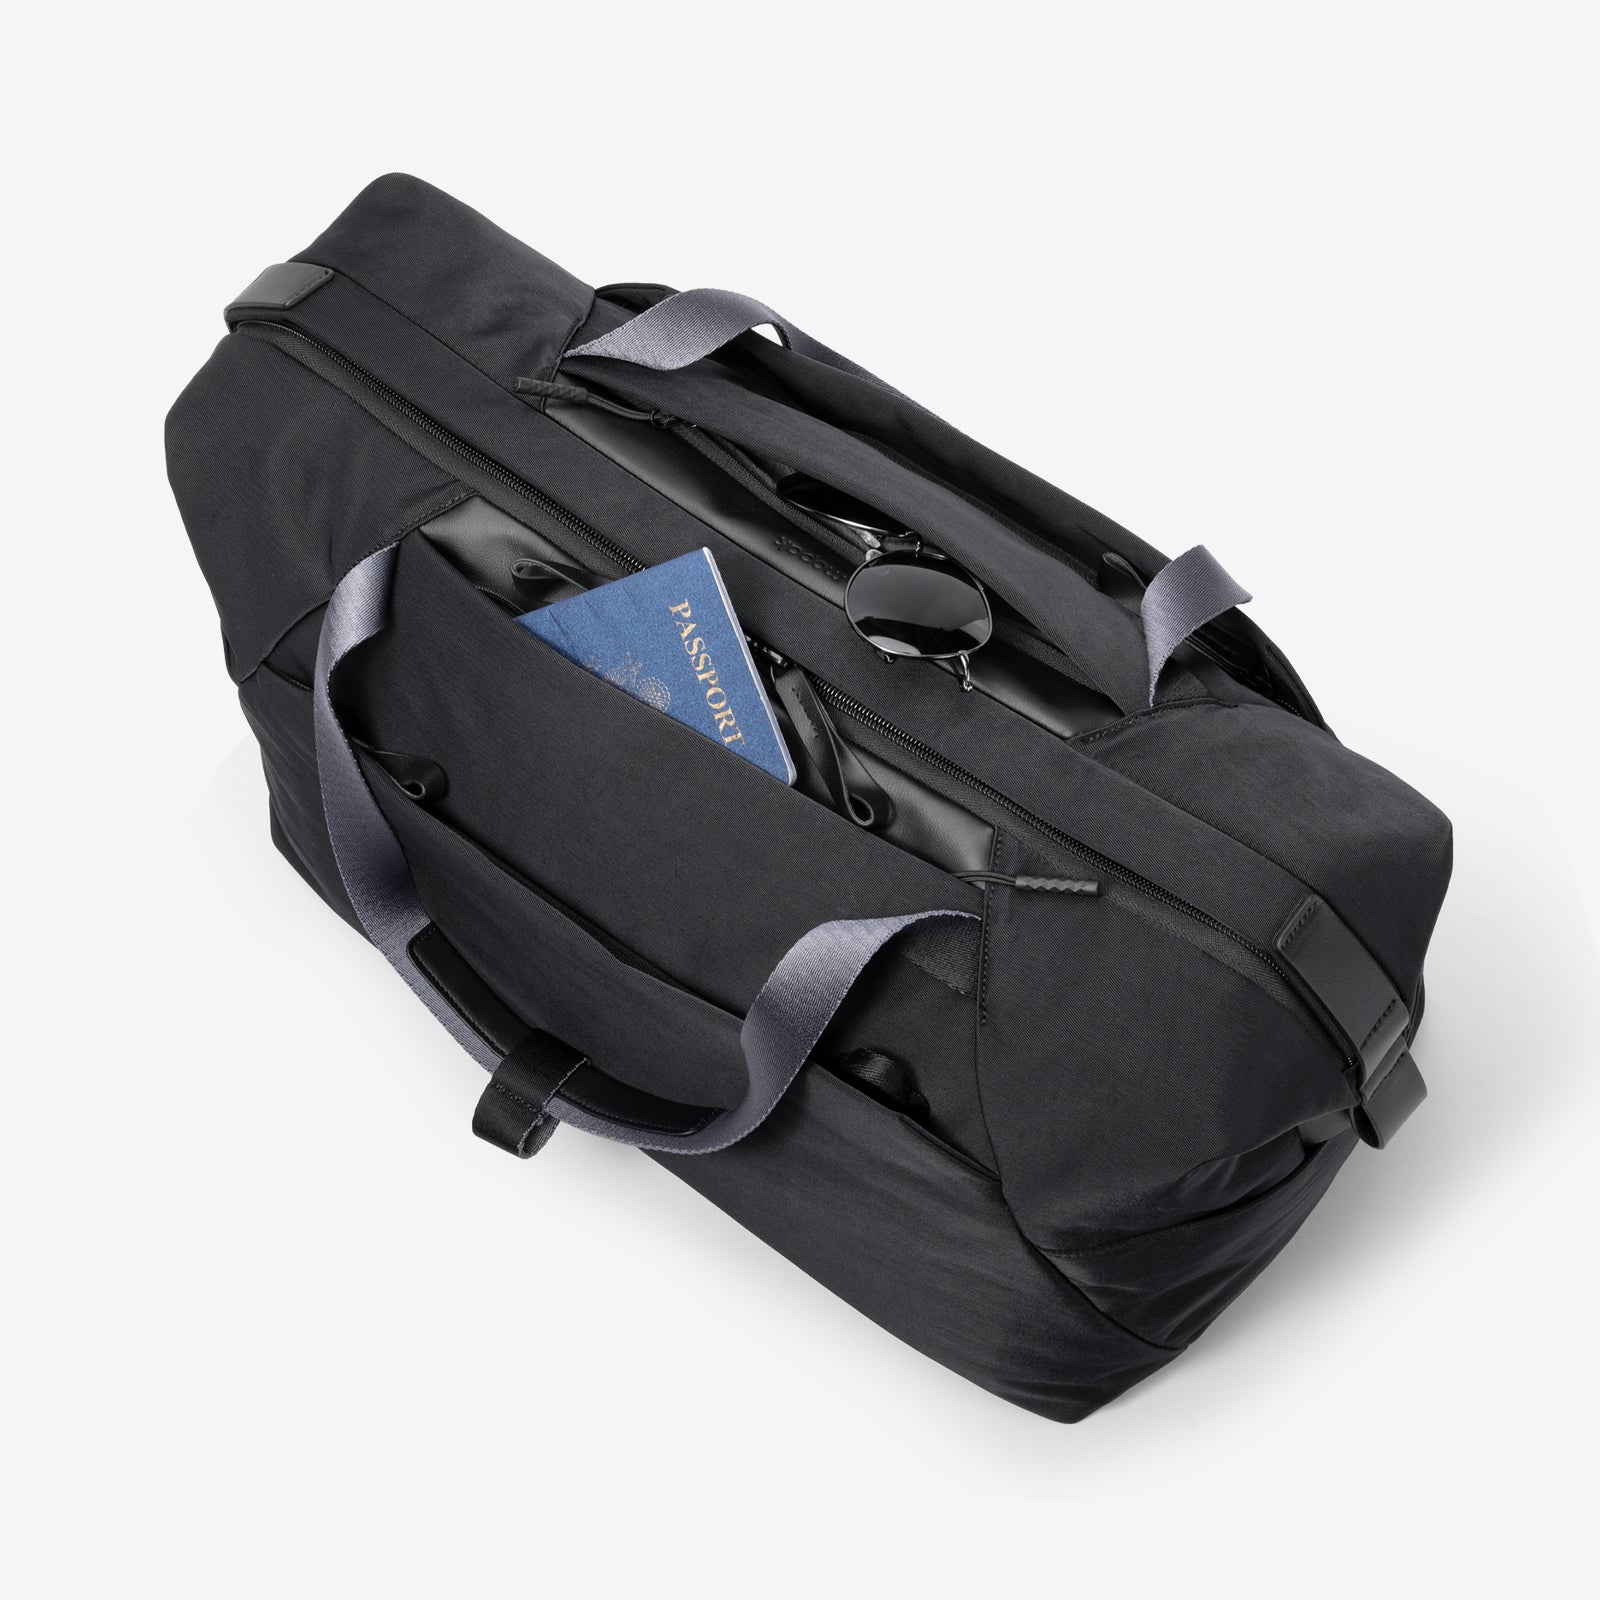 Mopak Weekender Duffel Bag main compartment